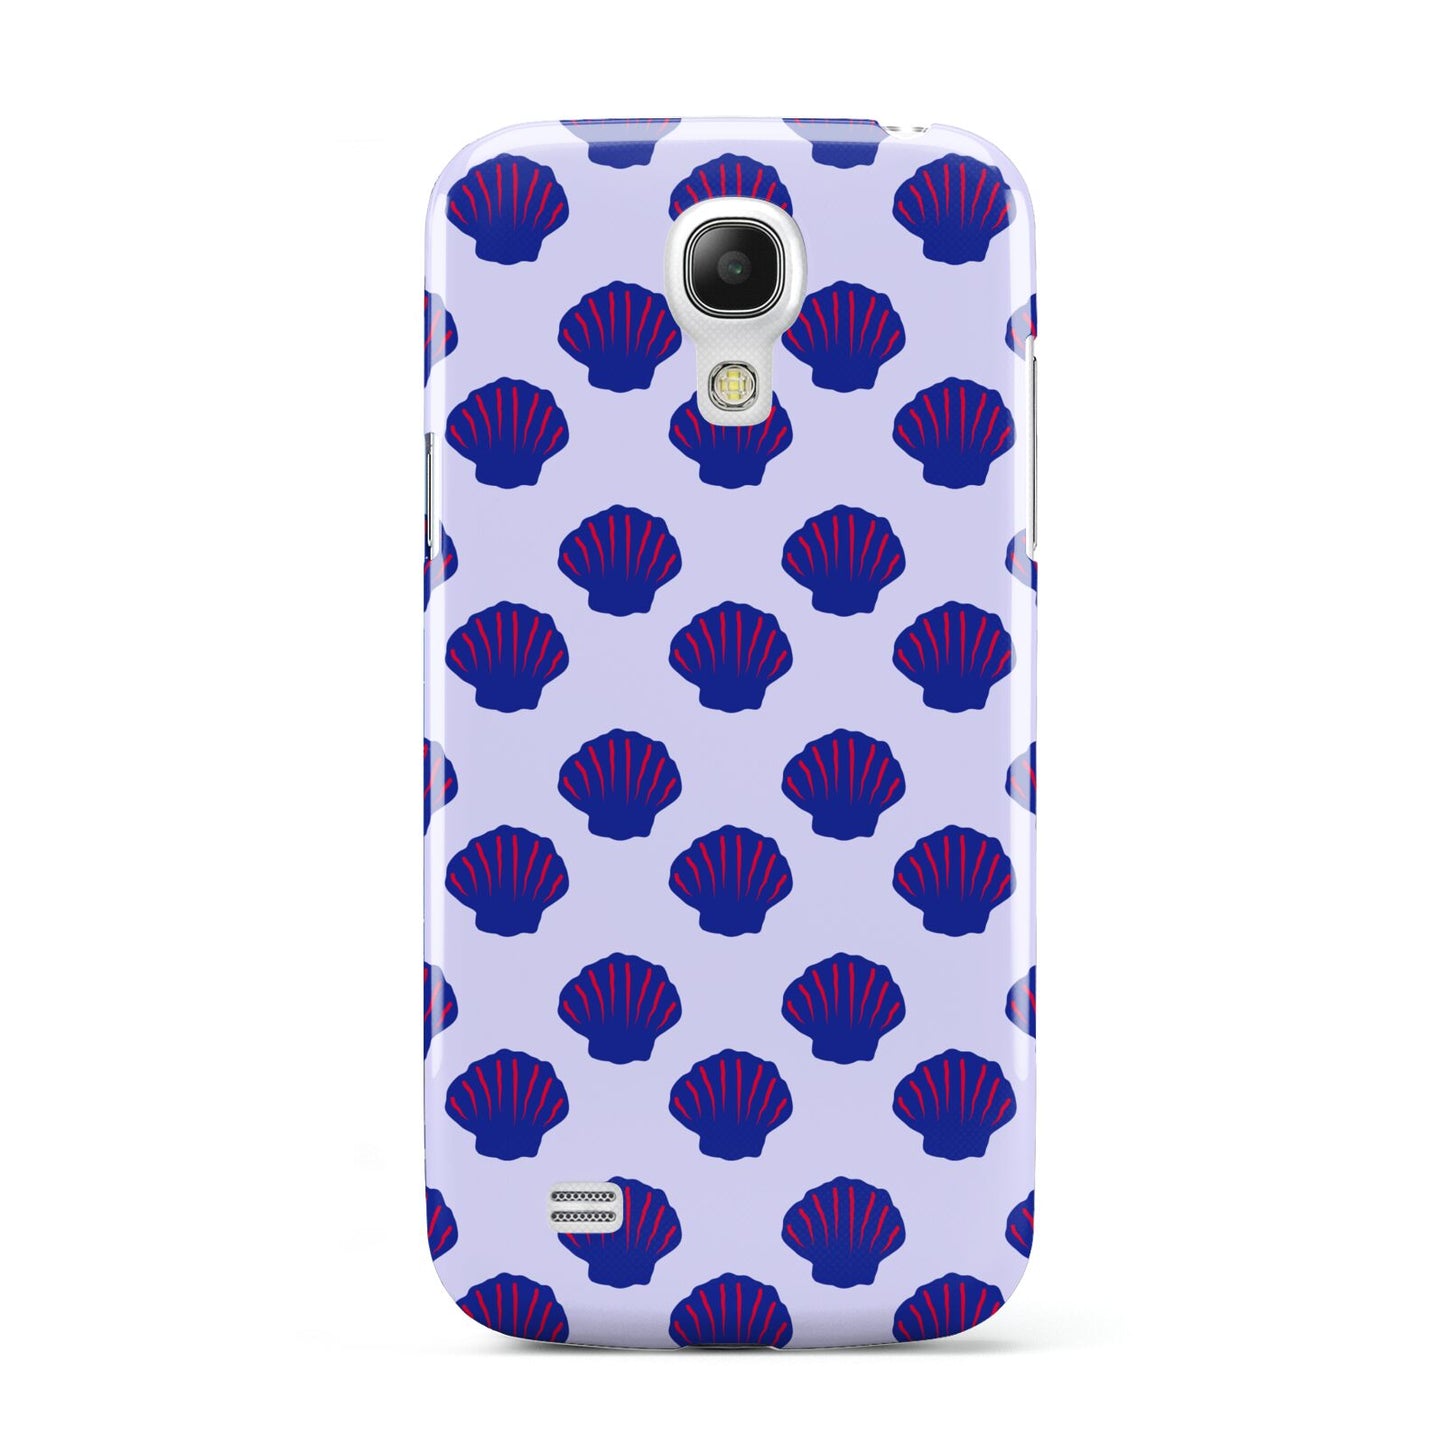 Shell Pattern Samsung Galaxy S4 Mini Case